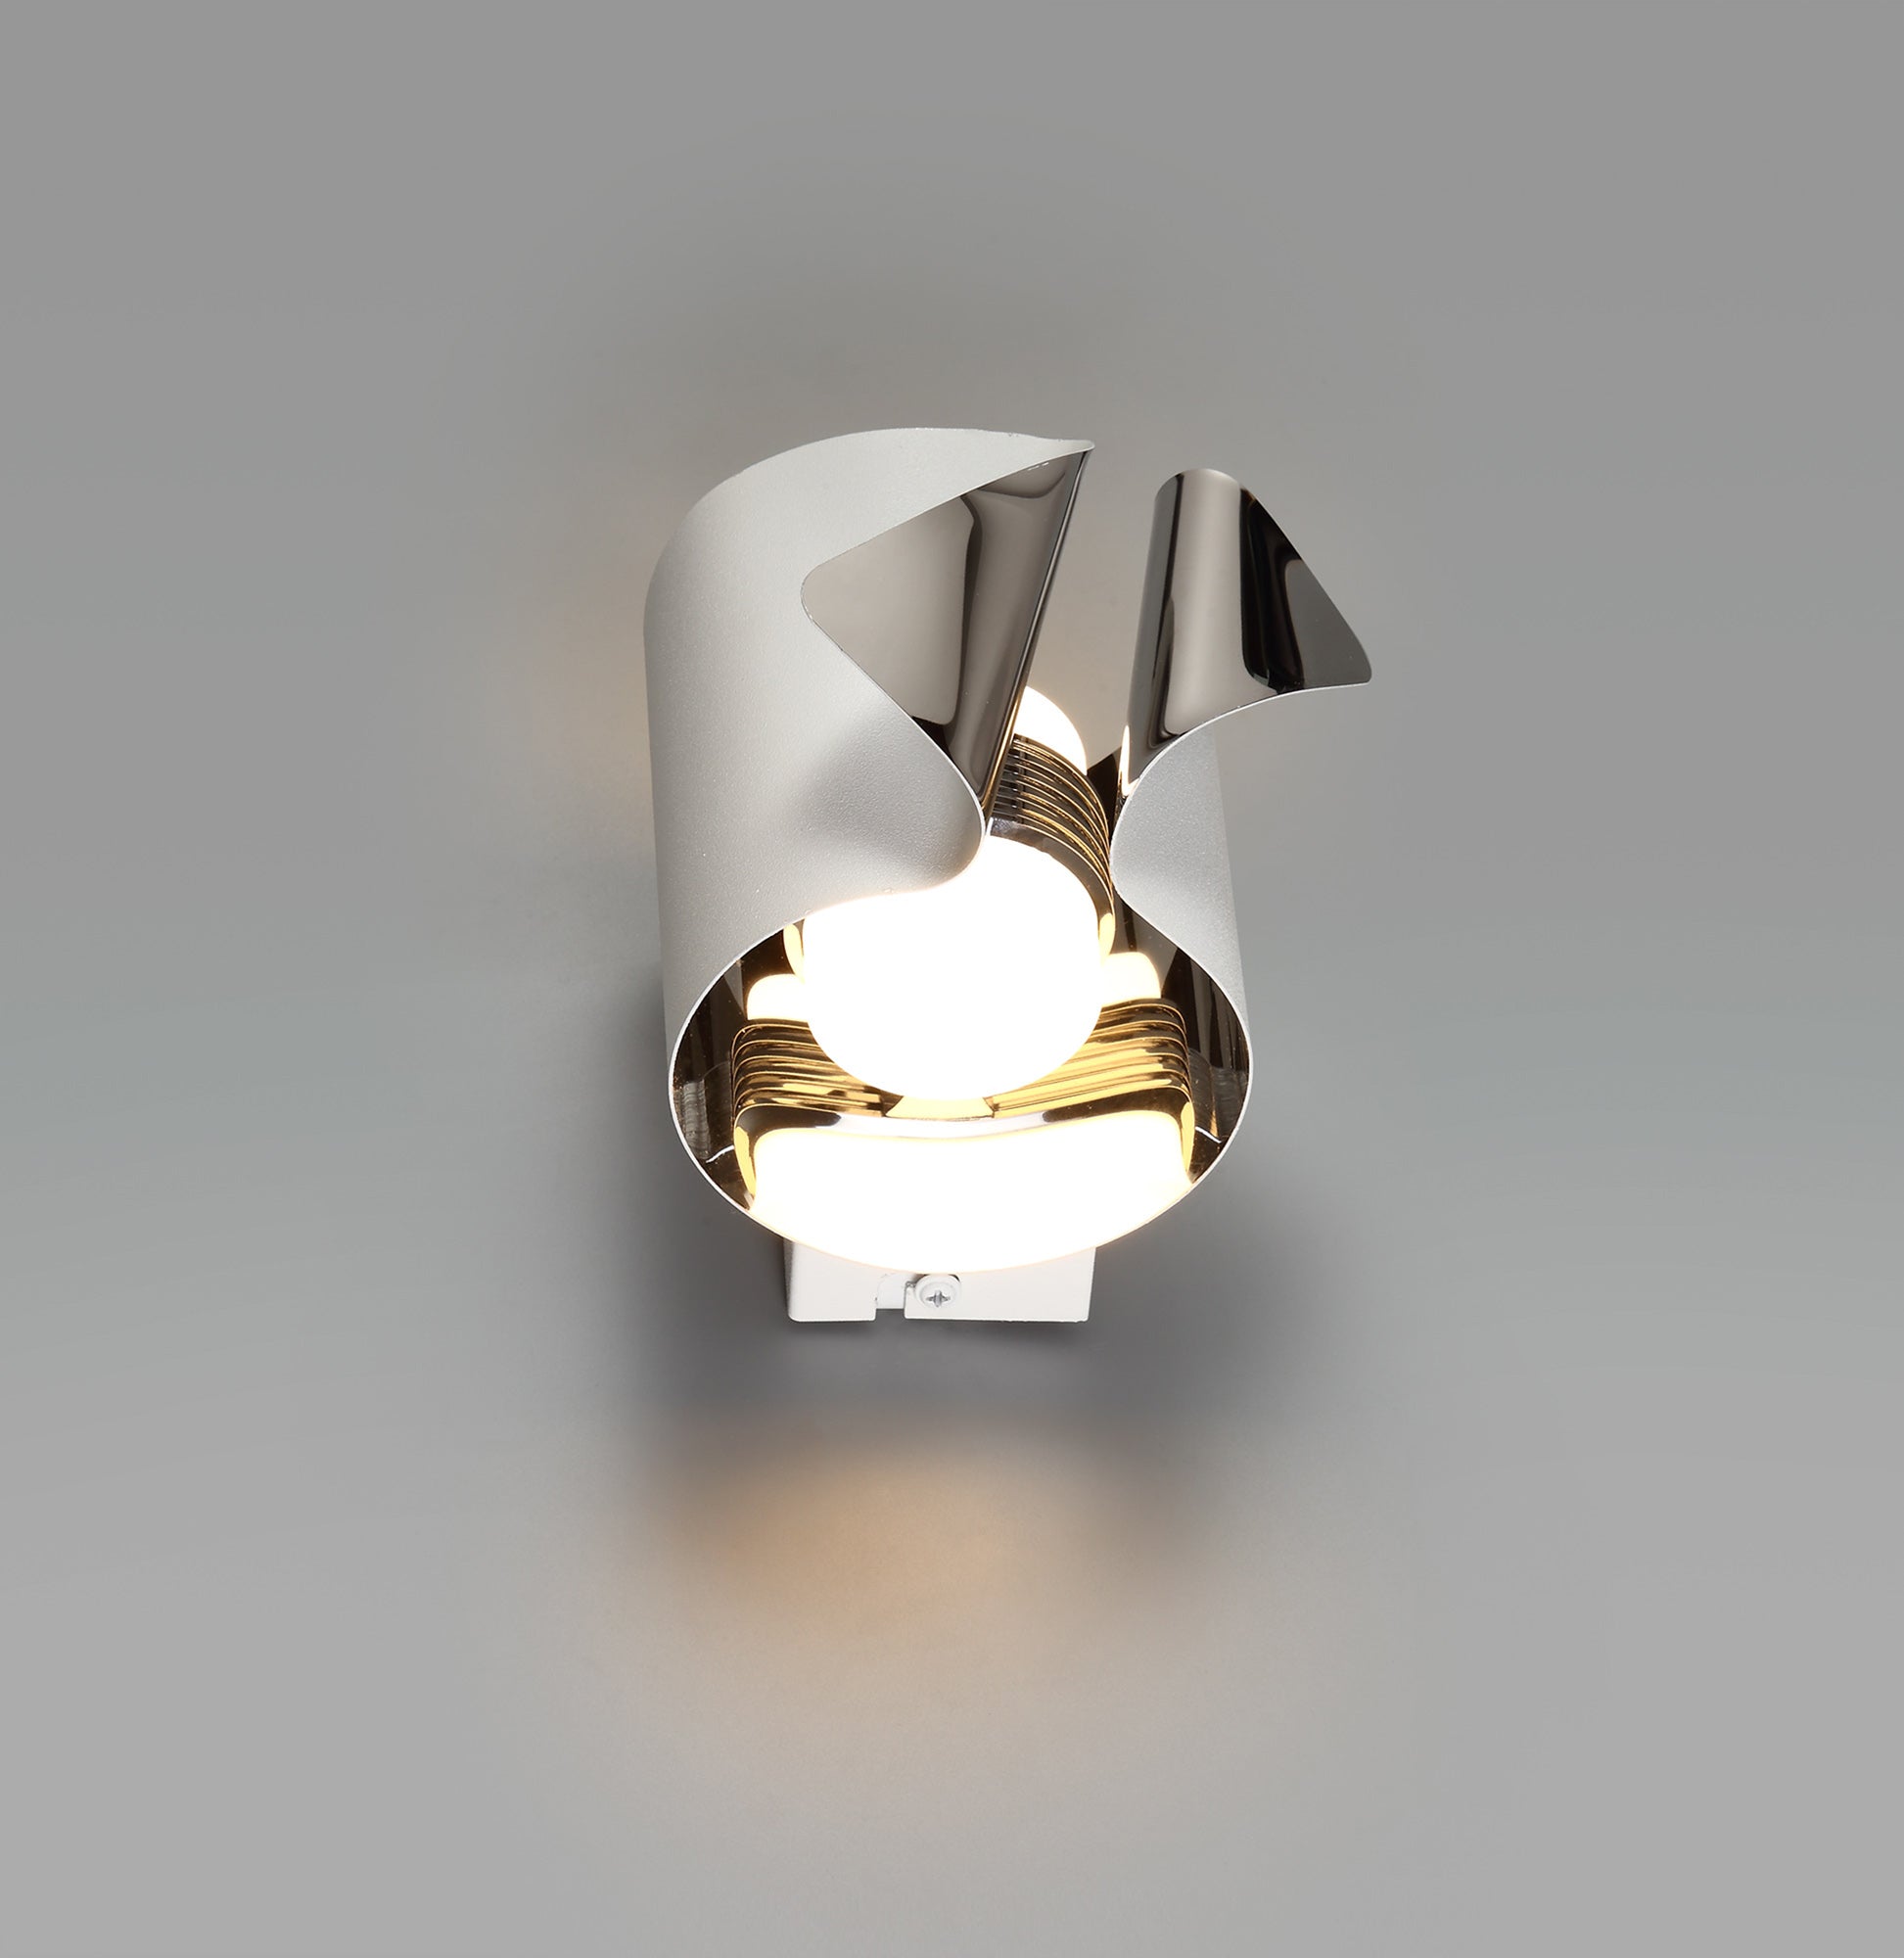 Brice Wall Lamp, 1 x 7W LED, 3000K, 490lm, Sand White/Polished Chrome, 3yrs Warranty